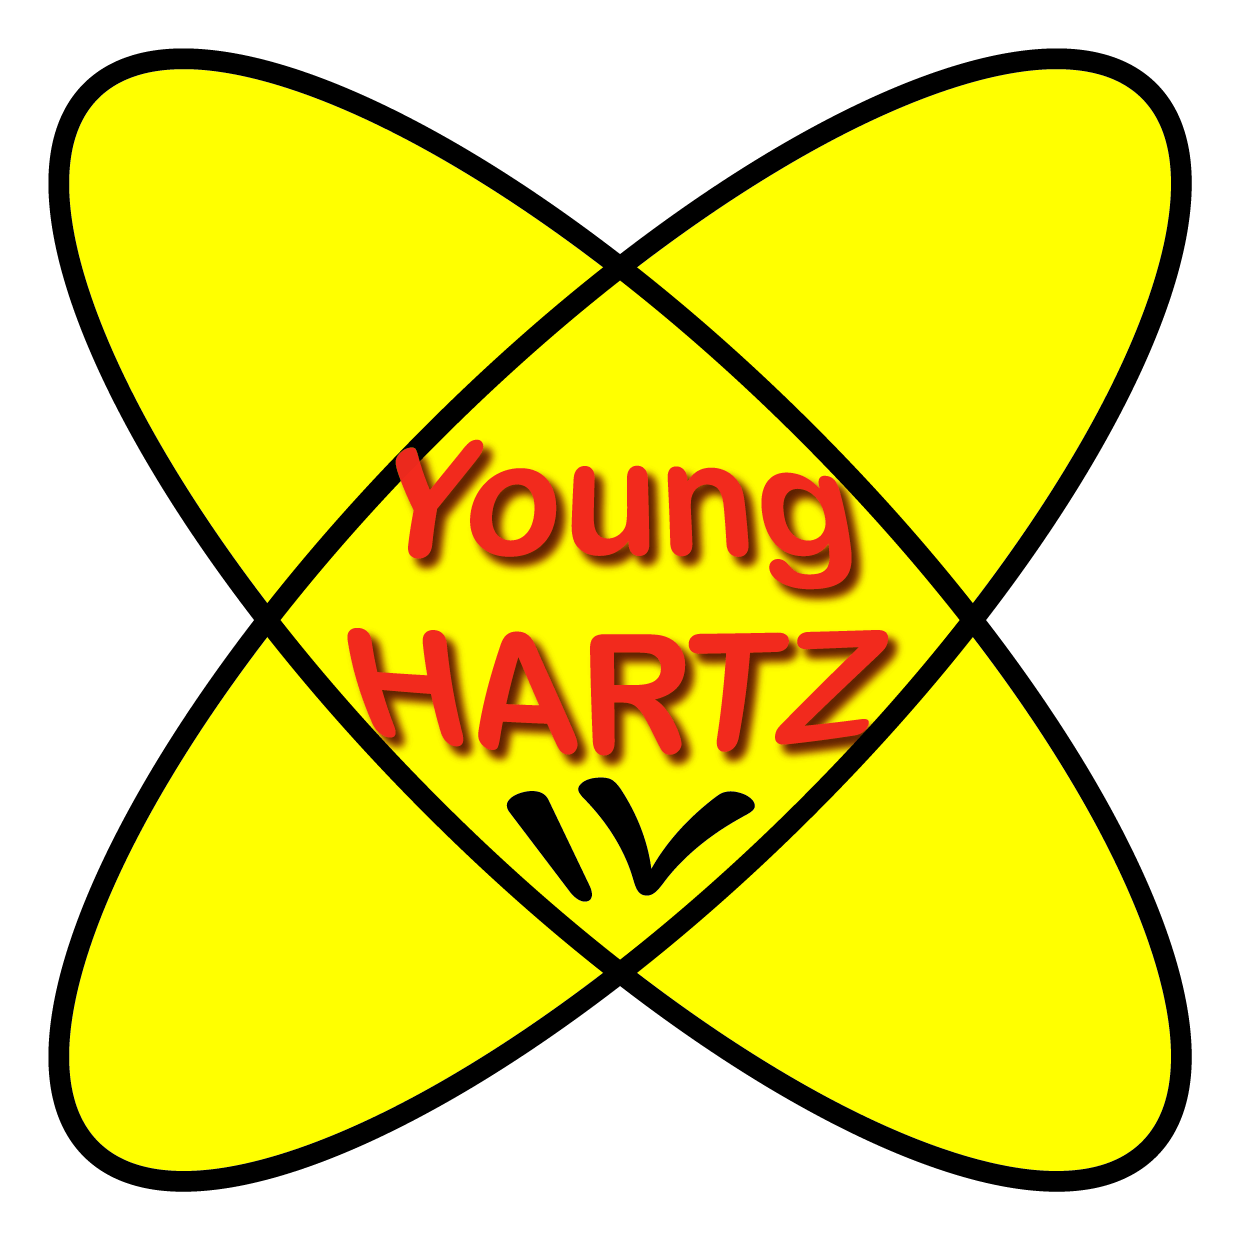 Happy Hartz Kollektion Young